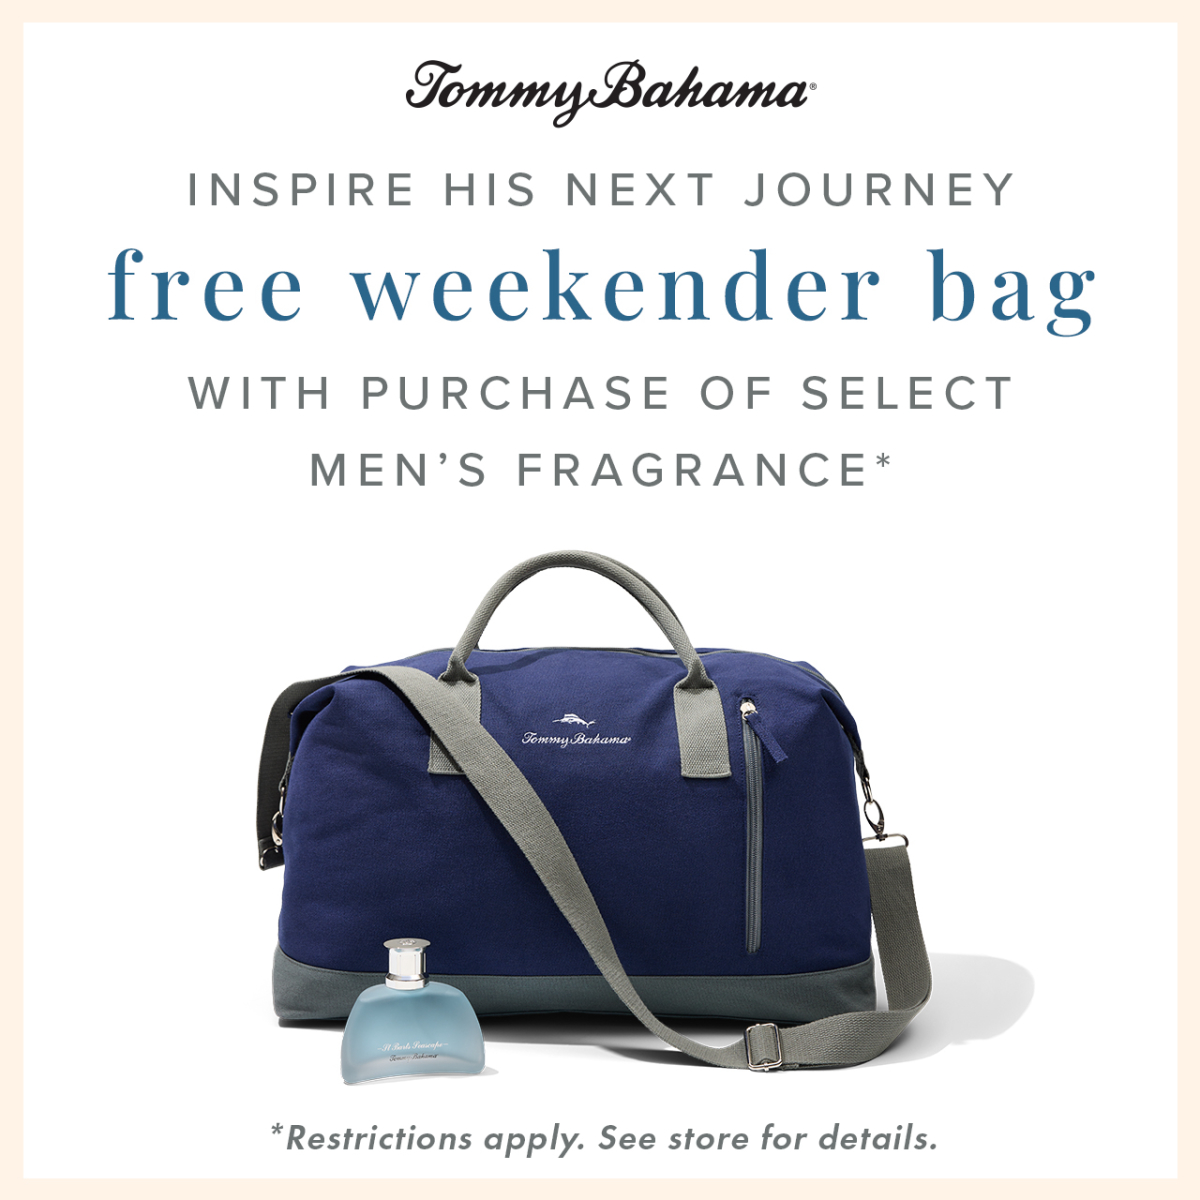 Free weekender bag from Tommy Bahama | Manhattan Village